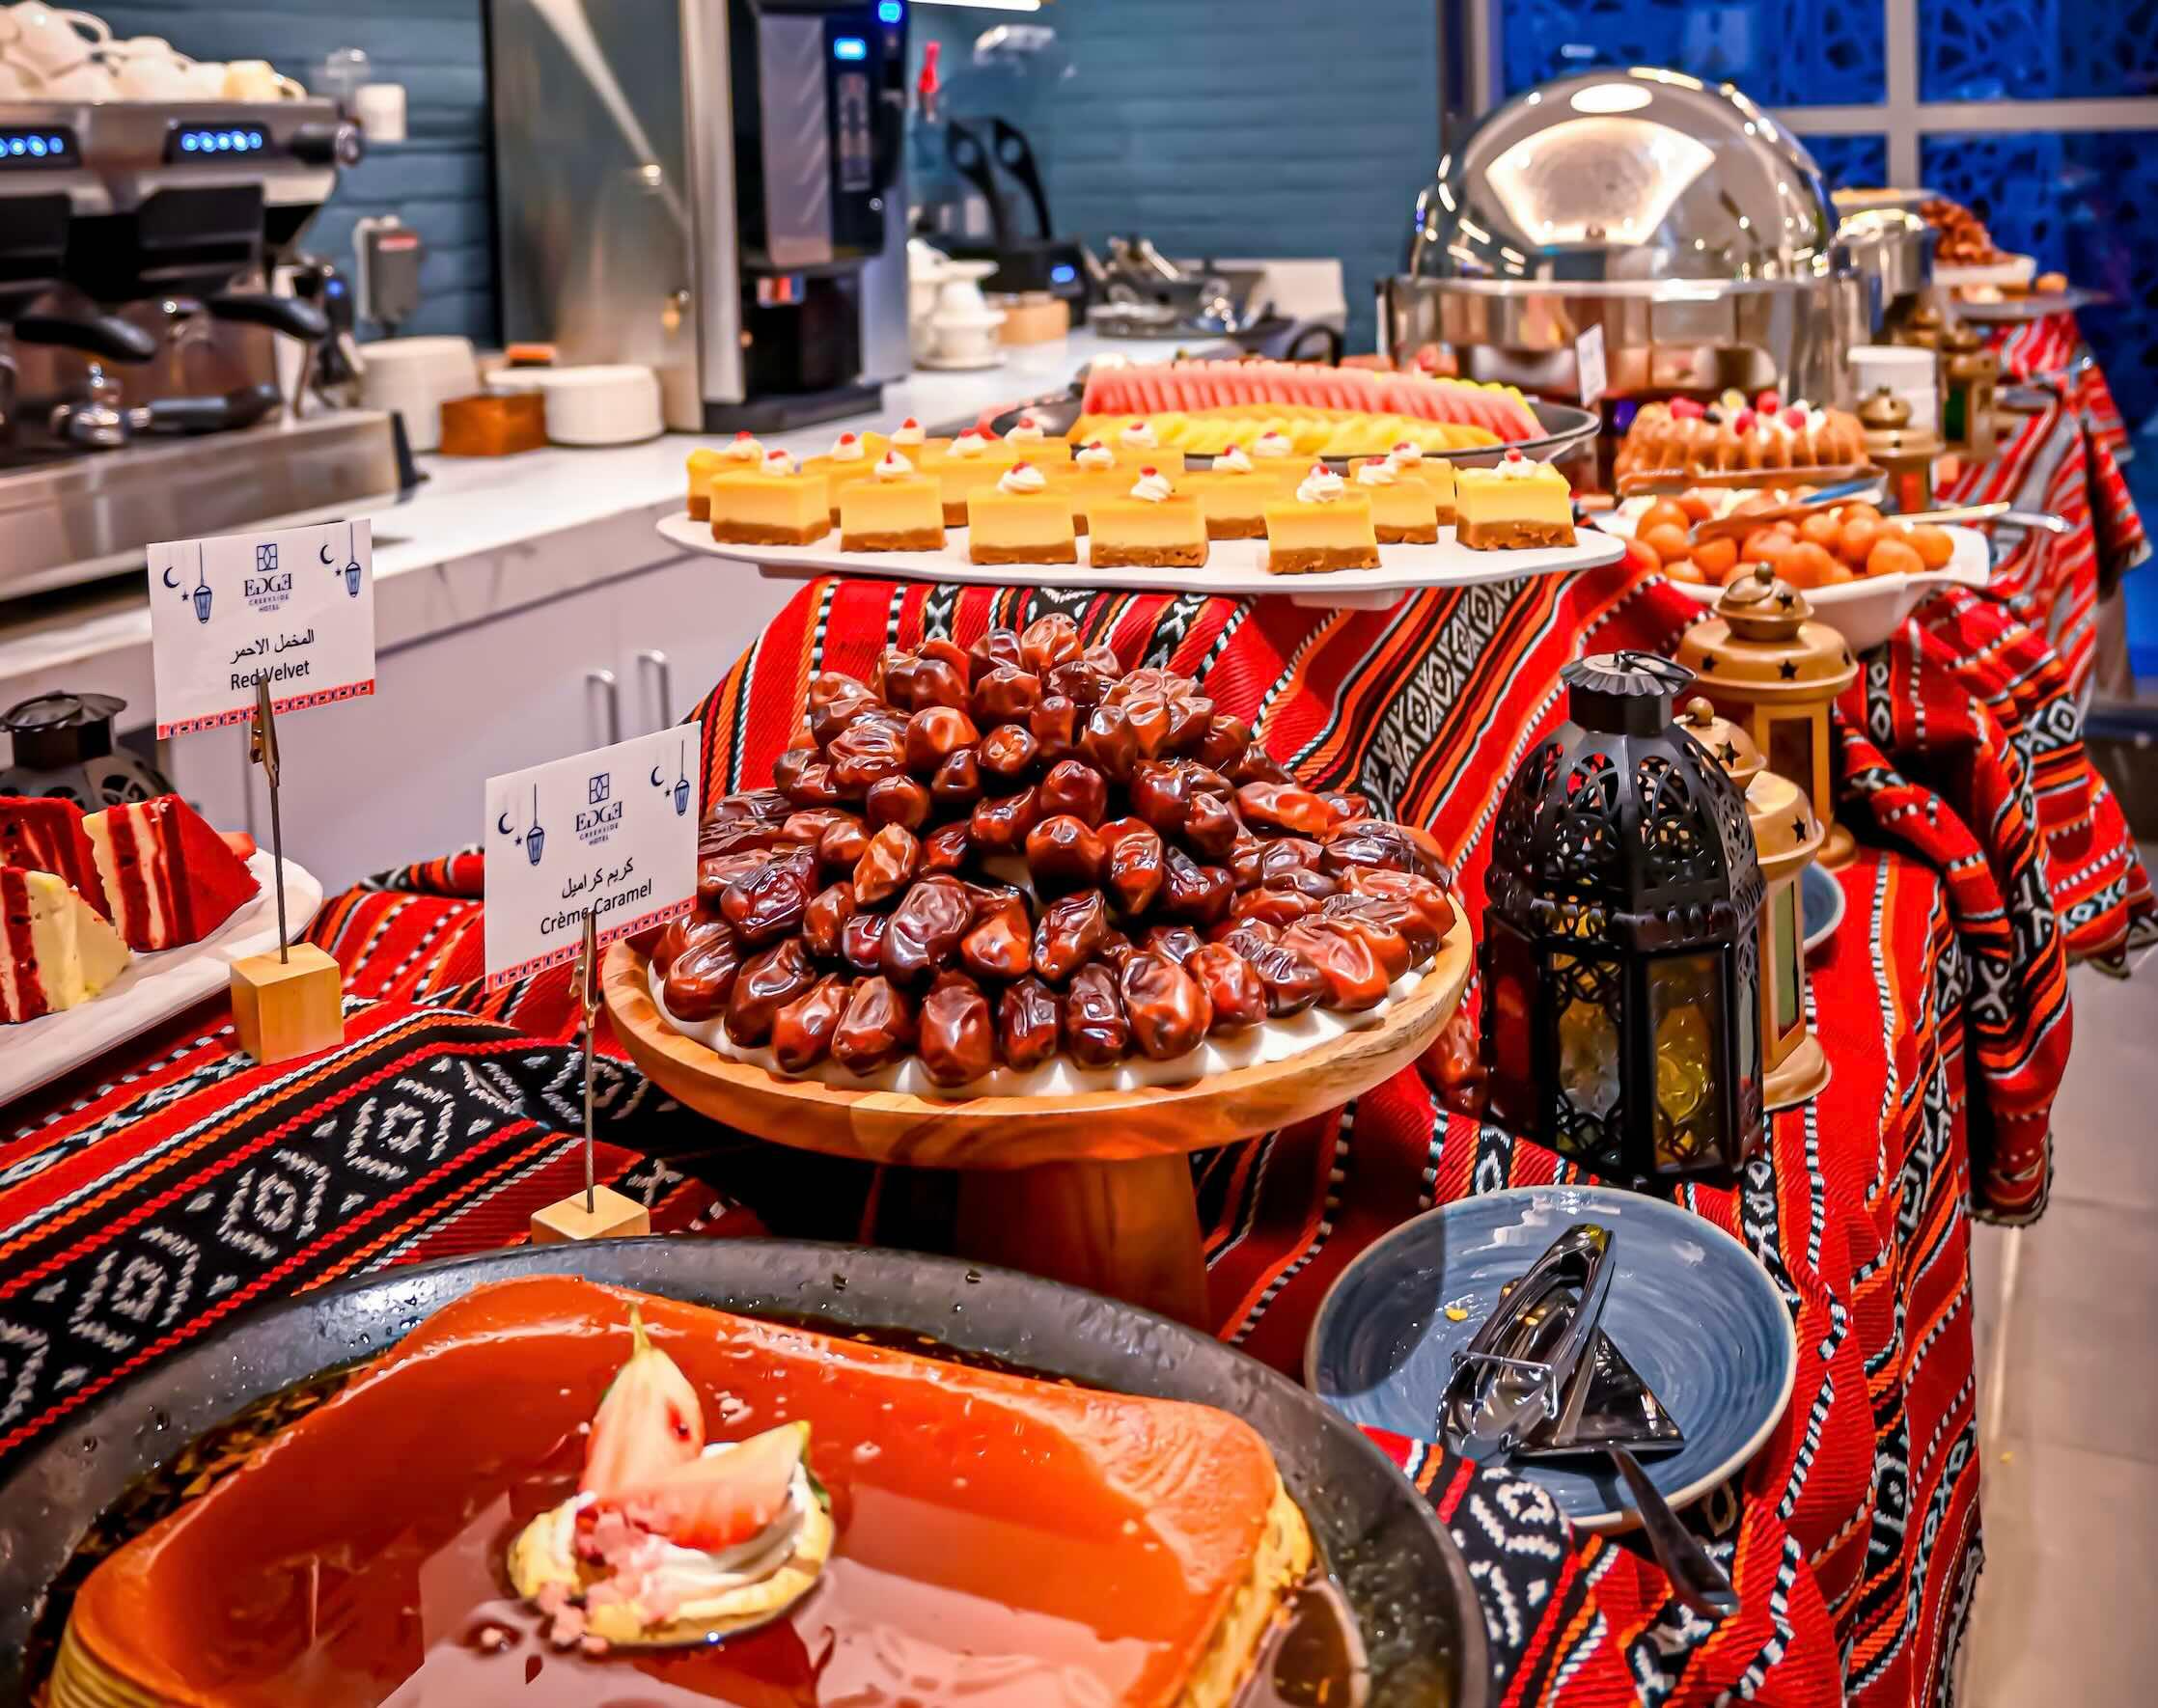 Embark on a Mediterranean culinary feast at FETA Restaurant this Ramadan